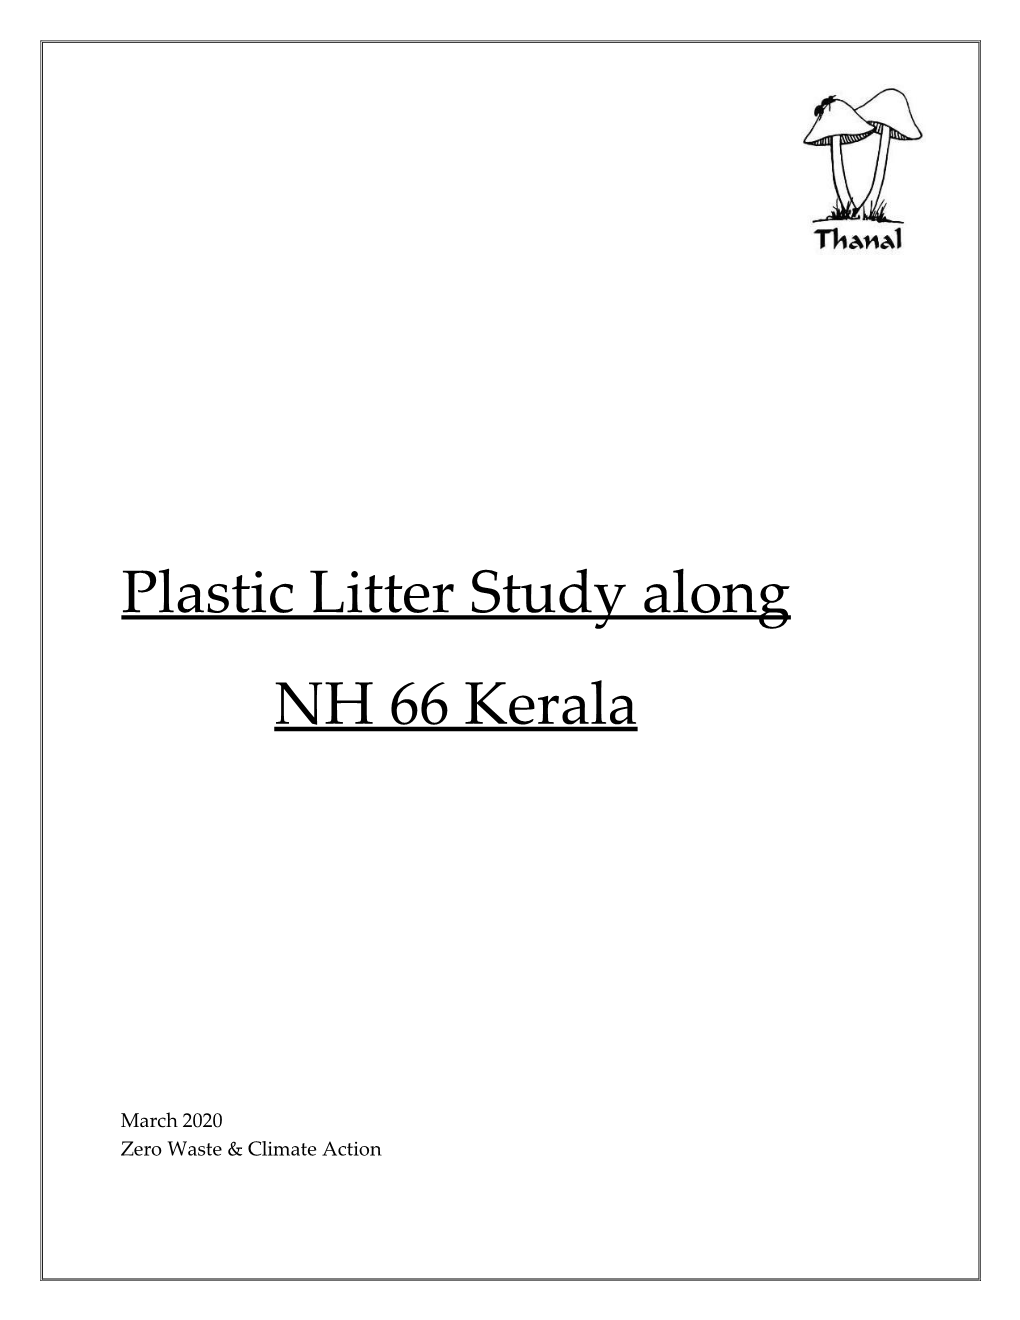 Plastic Litter Study Along NH 66 Kerala